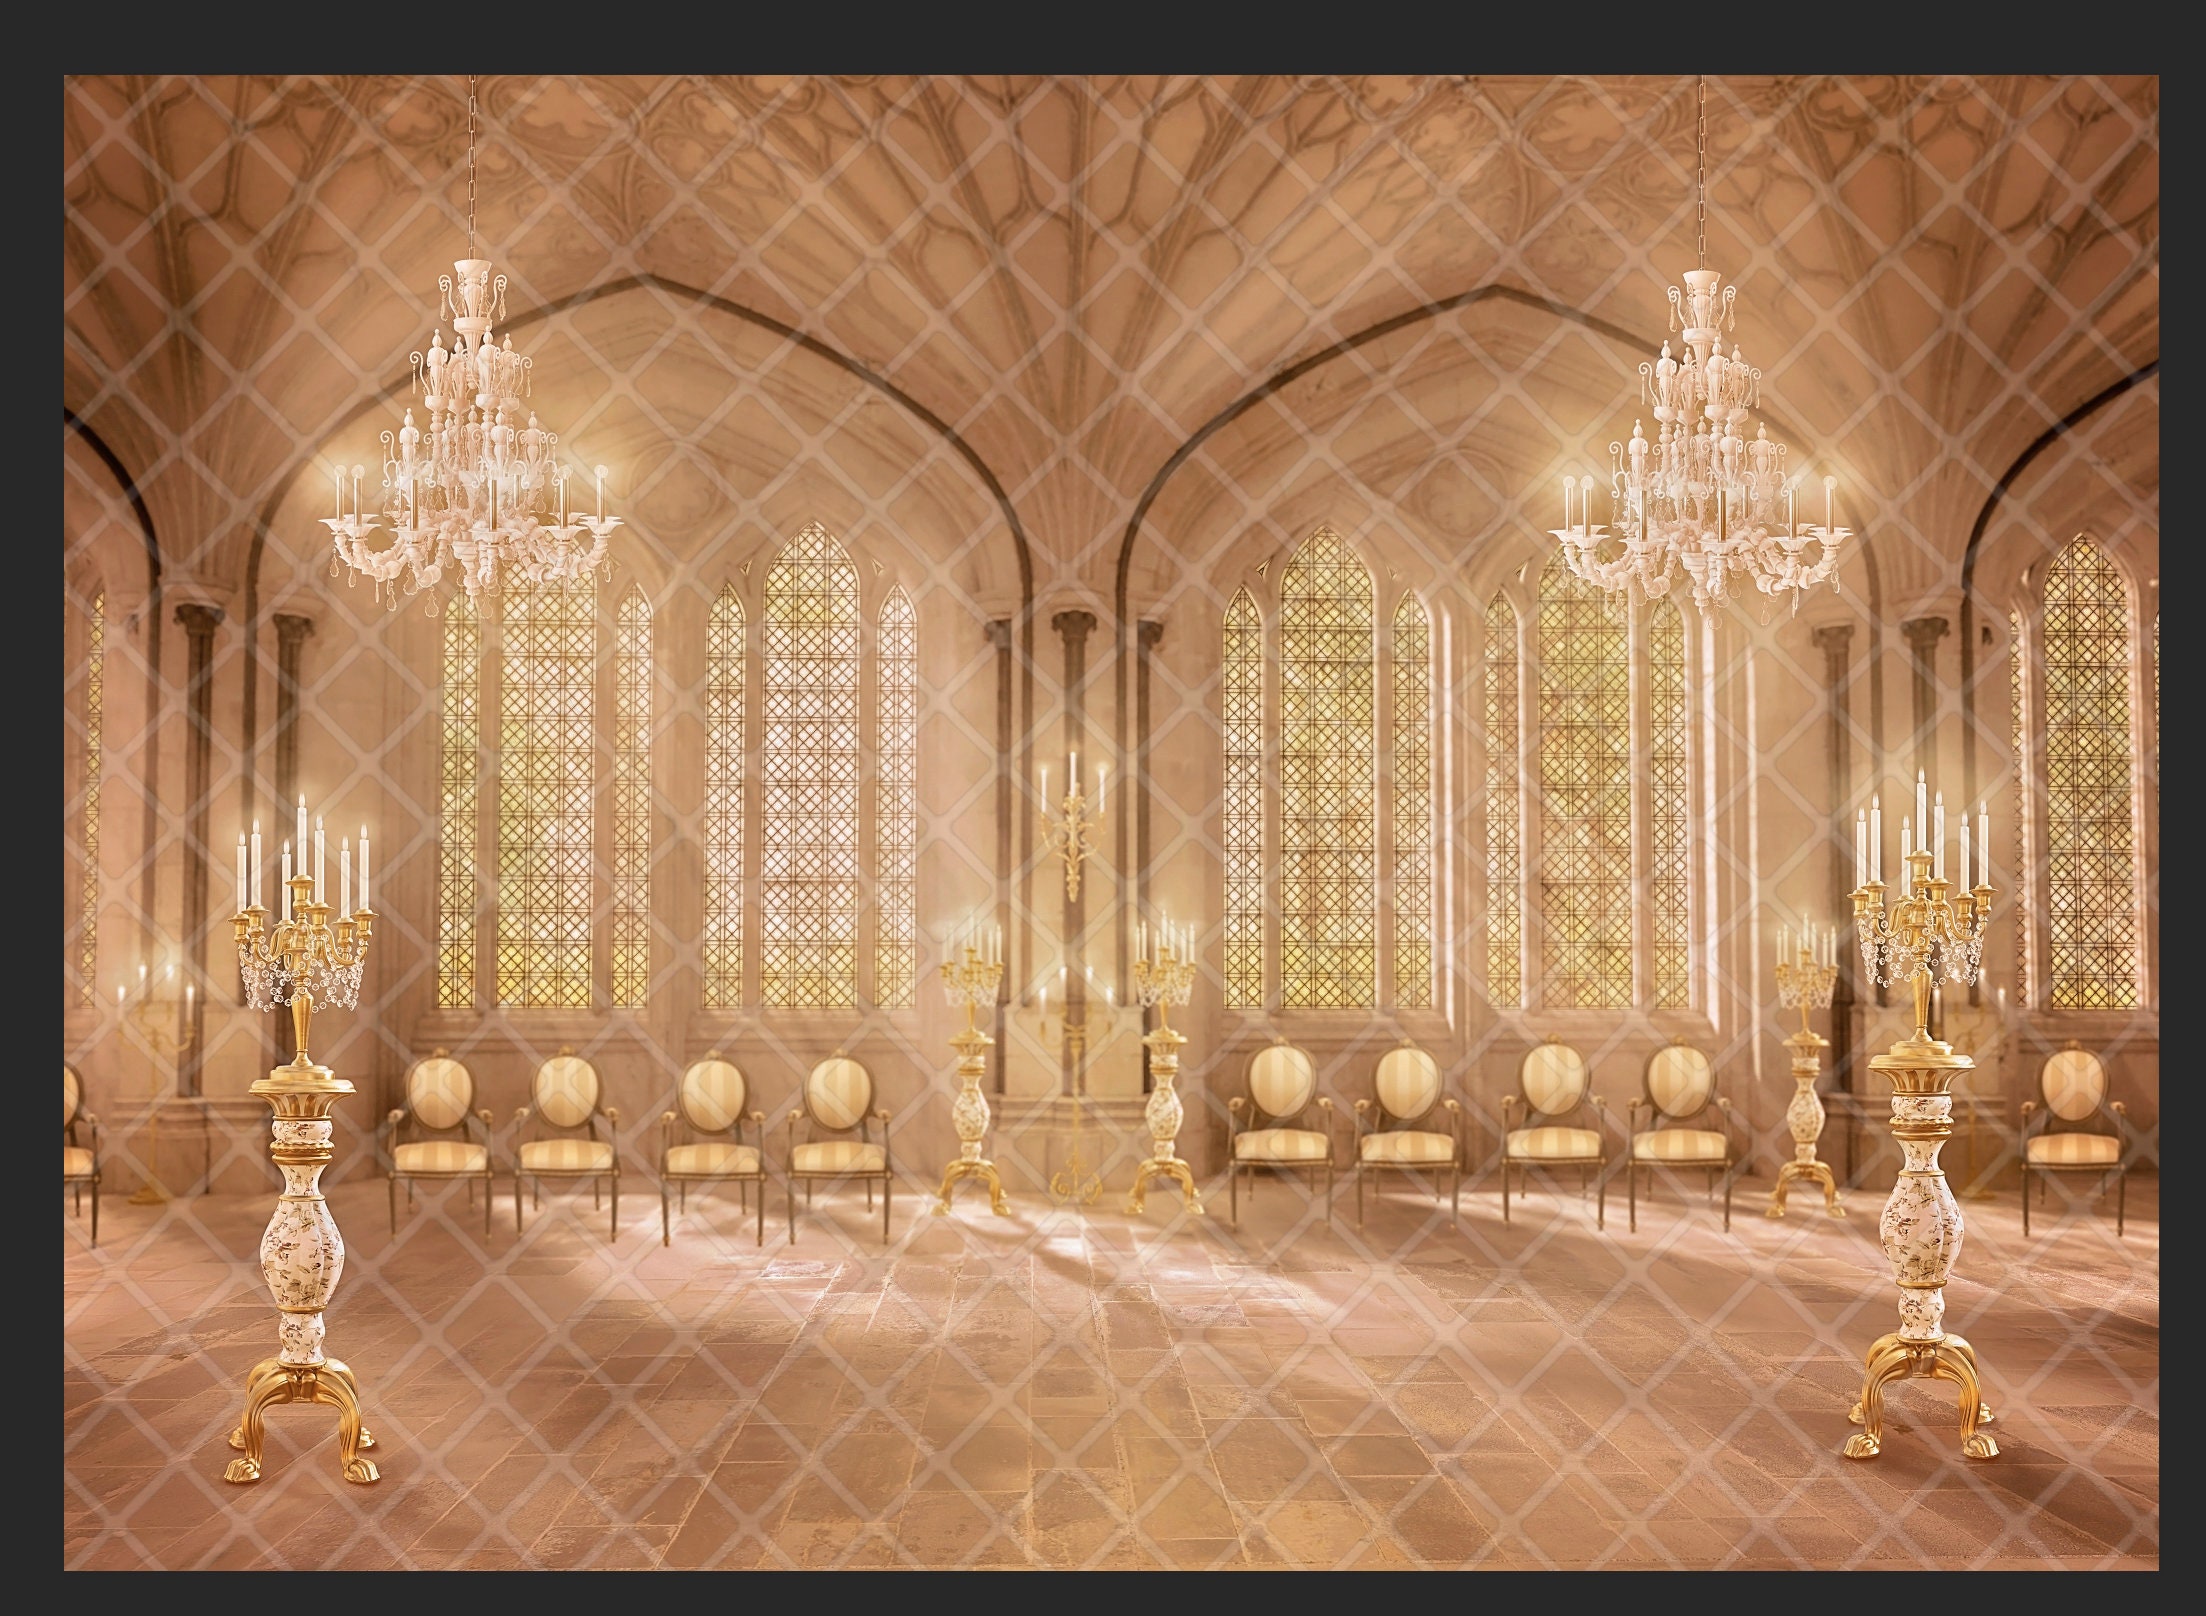 Castle ballroom fairytale ballroom candlelight ballroom | Etsy